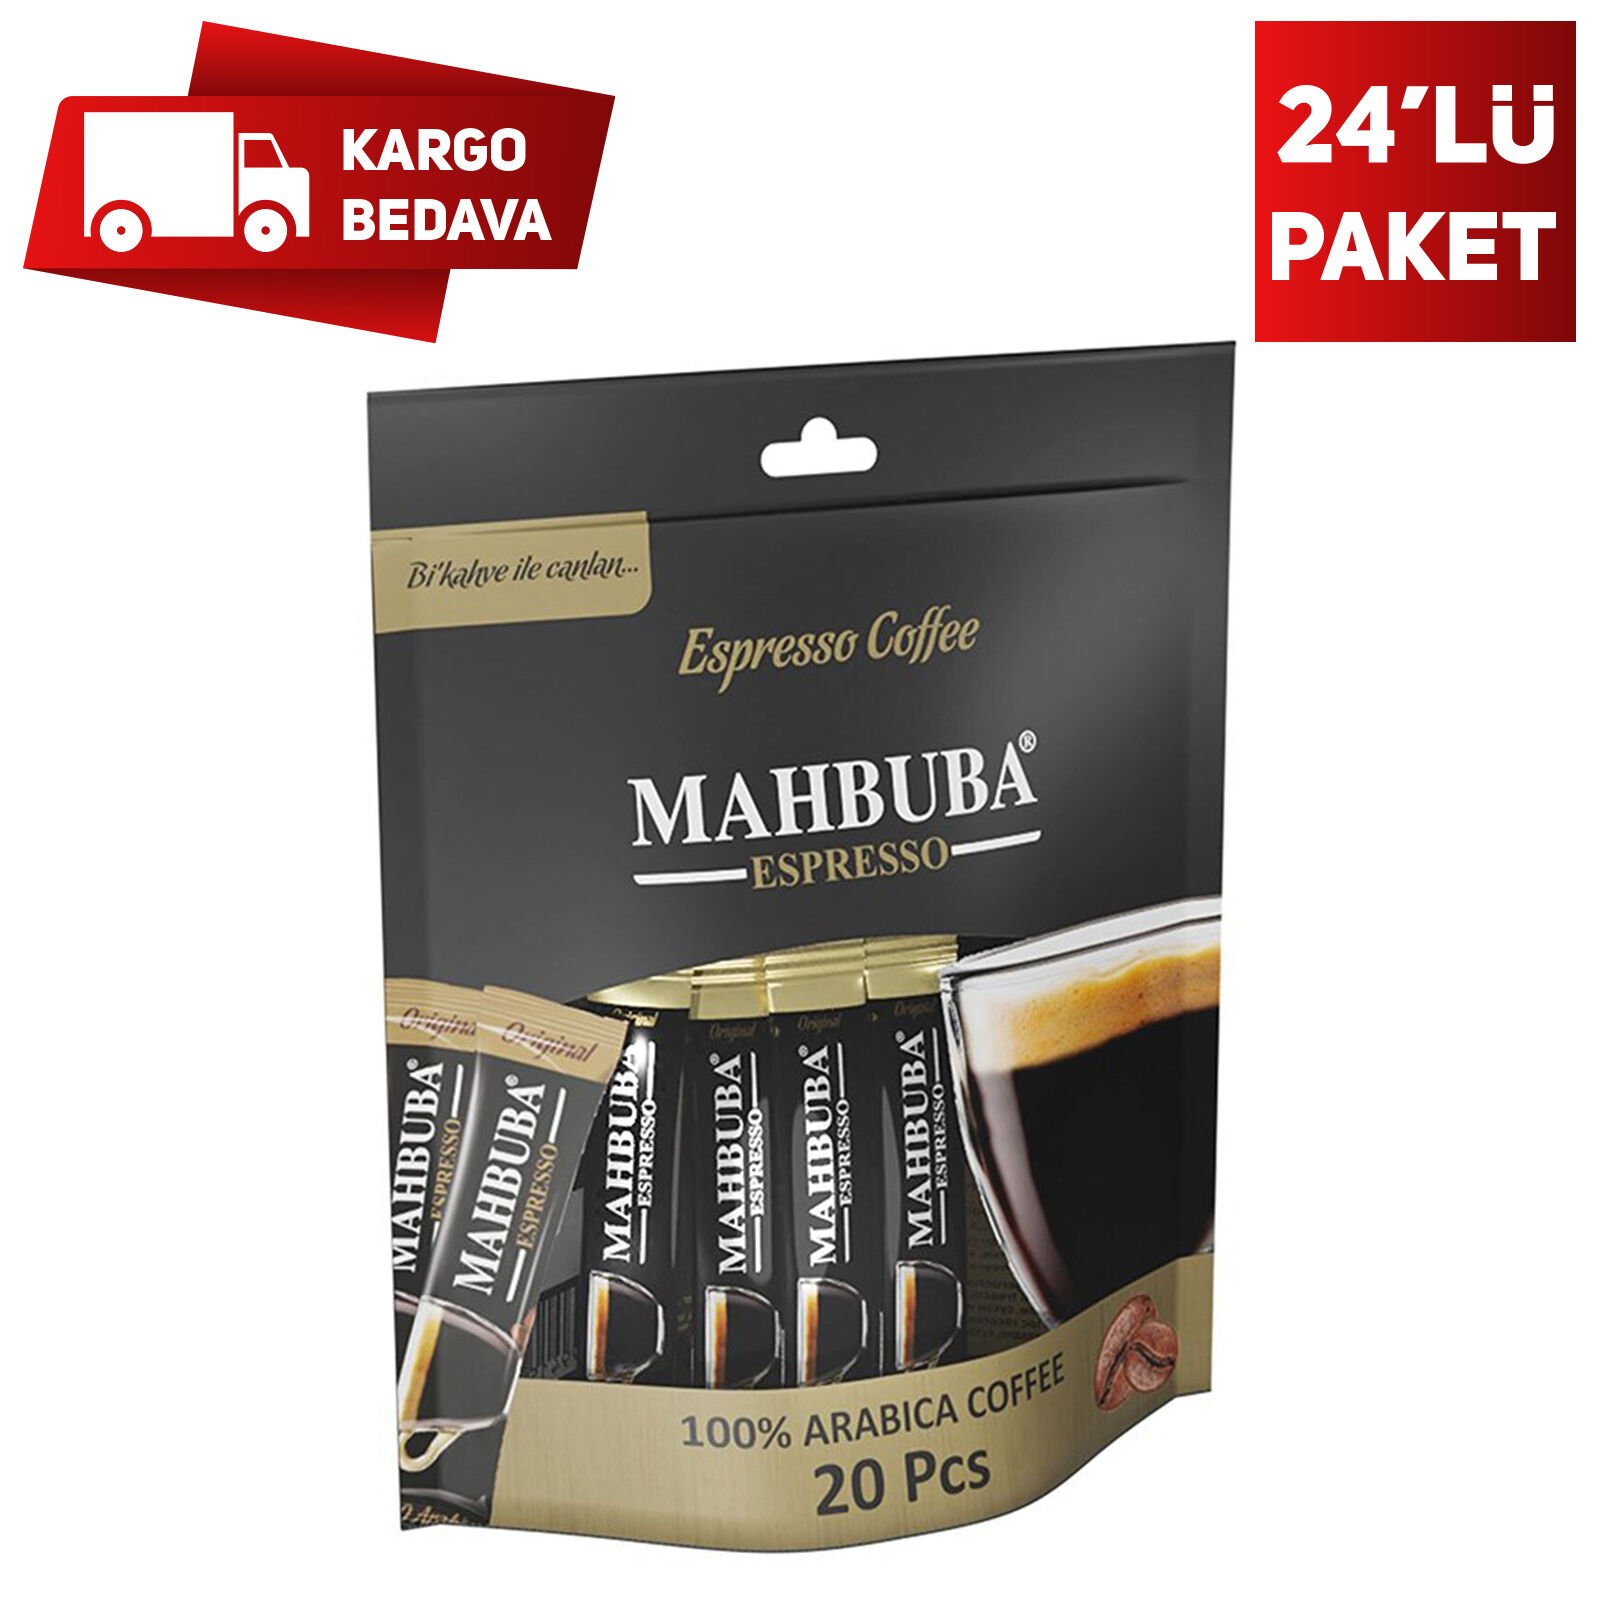 Mahbuba Hazır Öğütülmüş Espresso Kahve 24'lü Paket